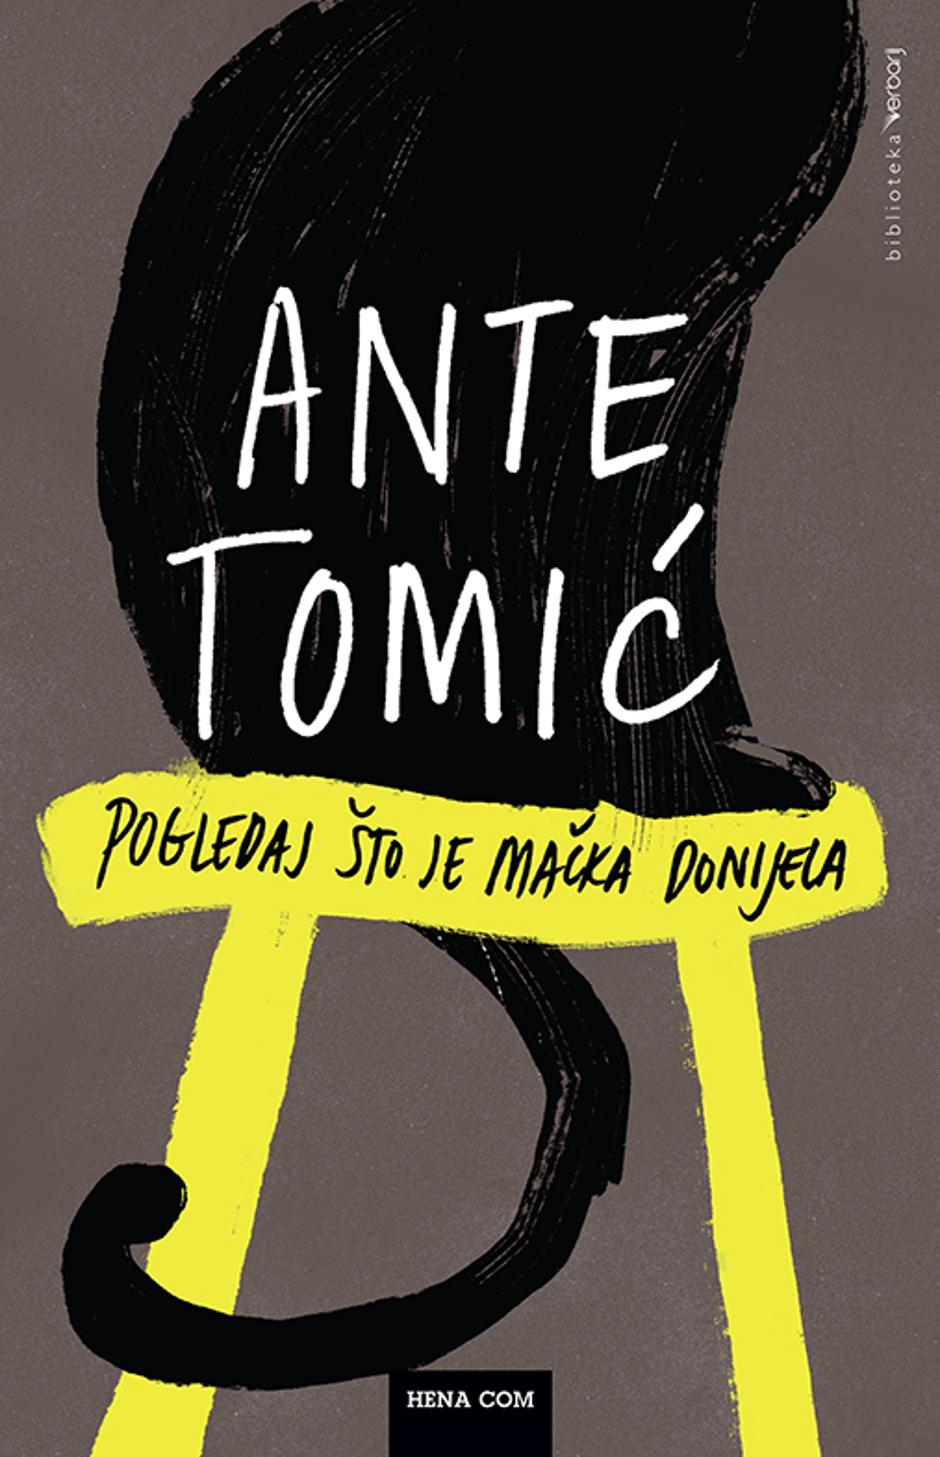 Ante Tomić | Author: Hena